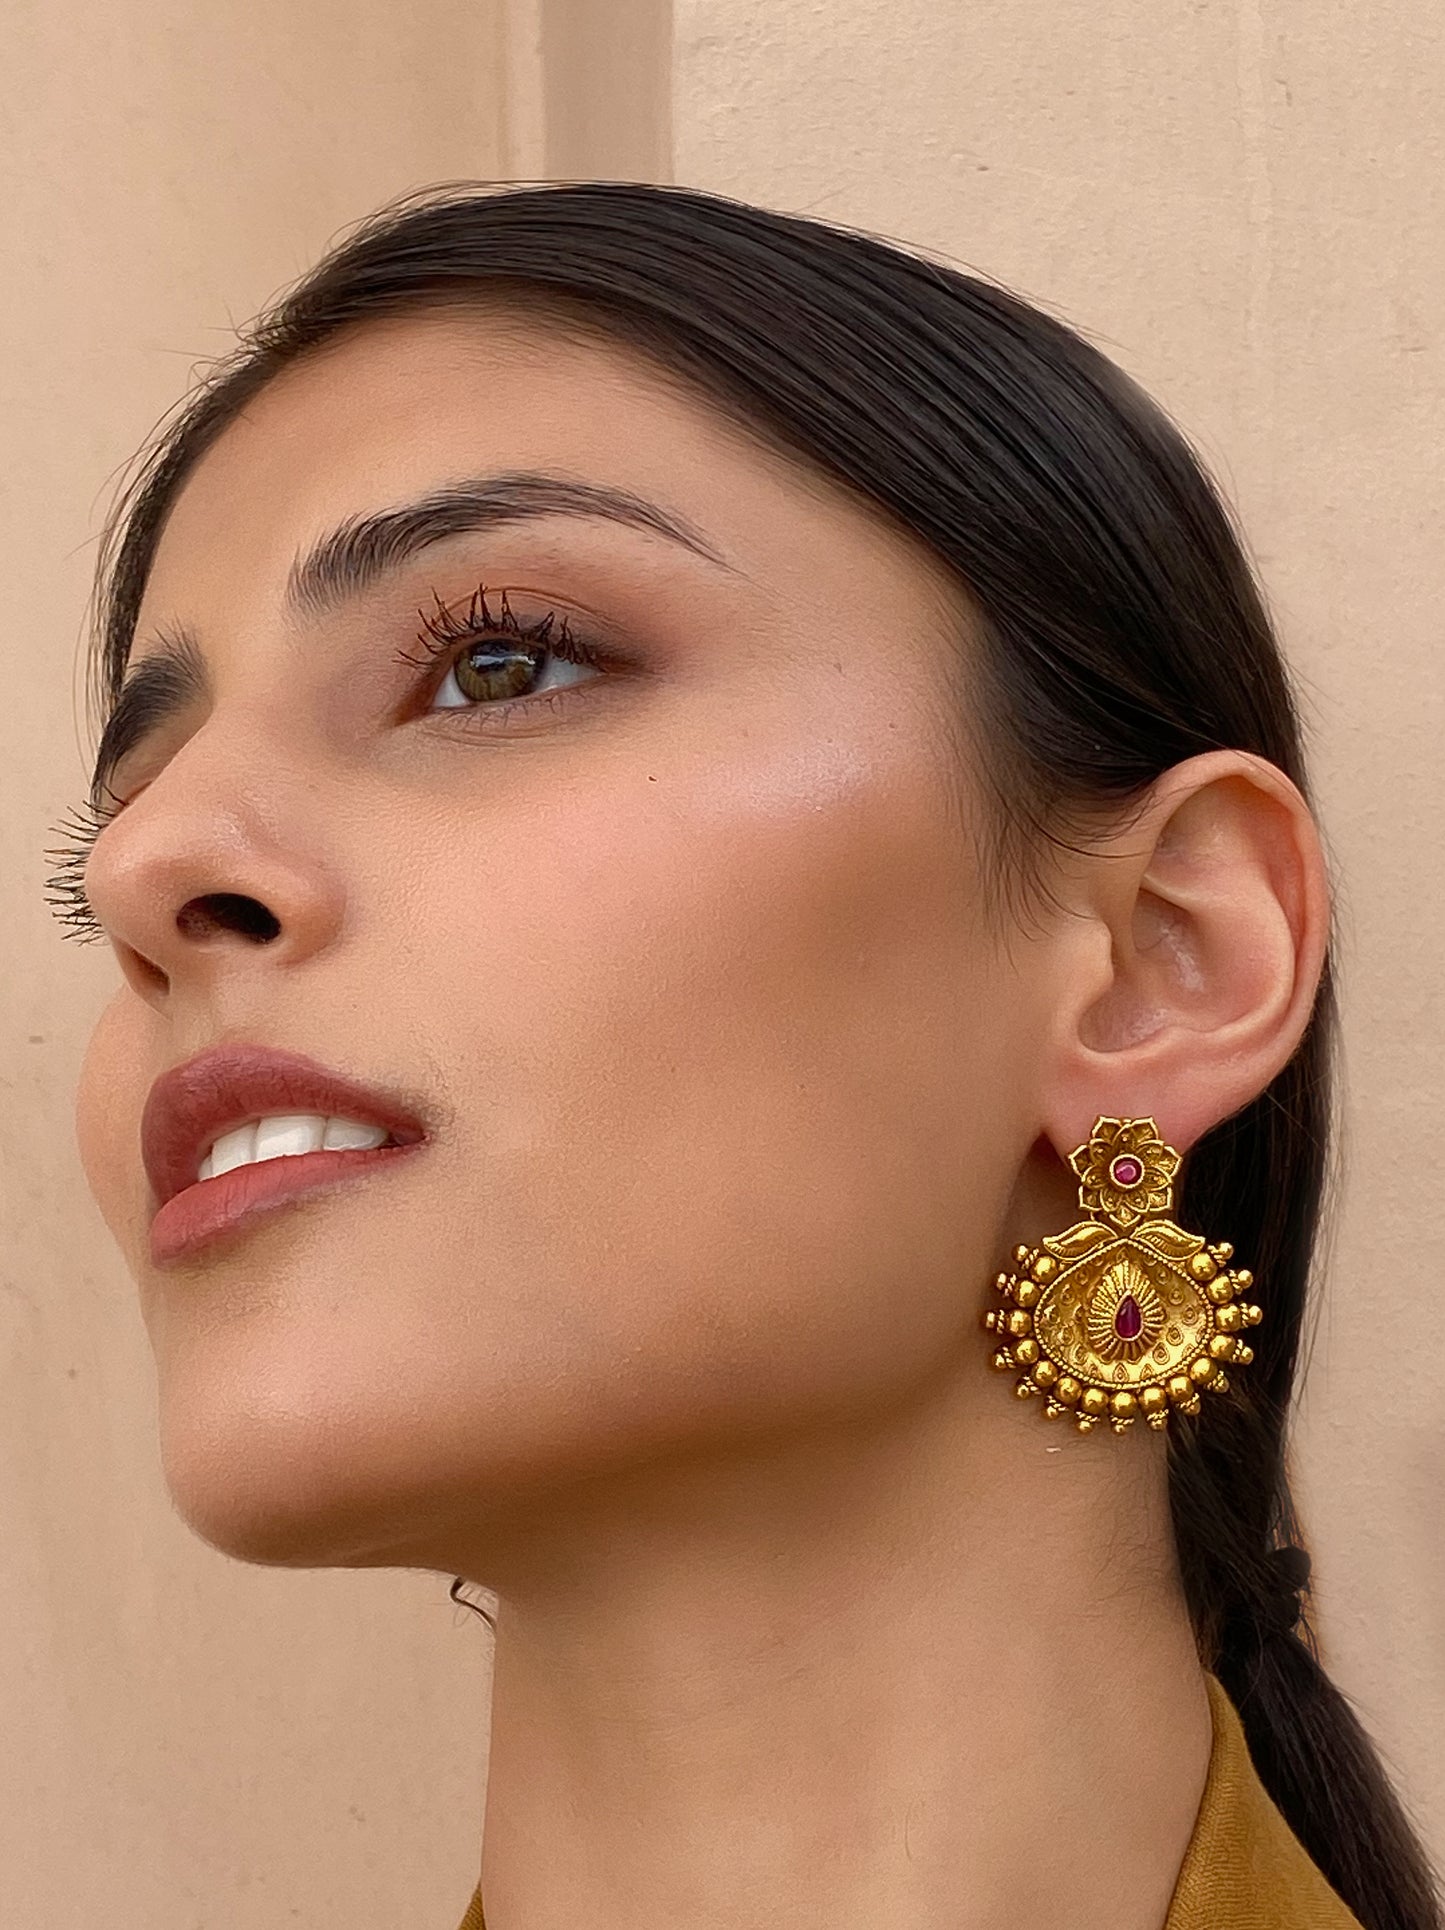 Sureena Antique Gold Finish Earrings